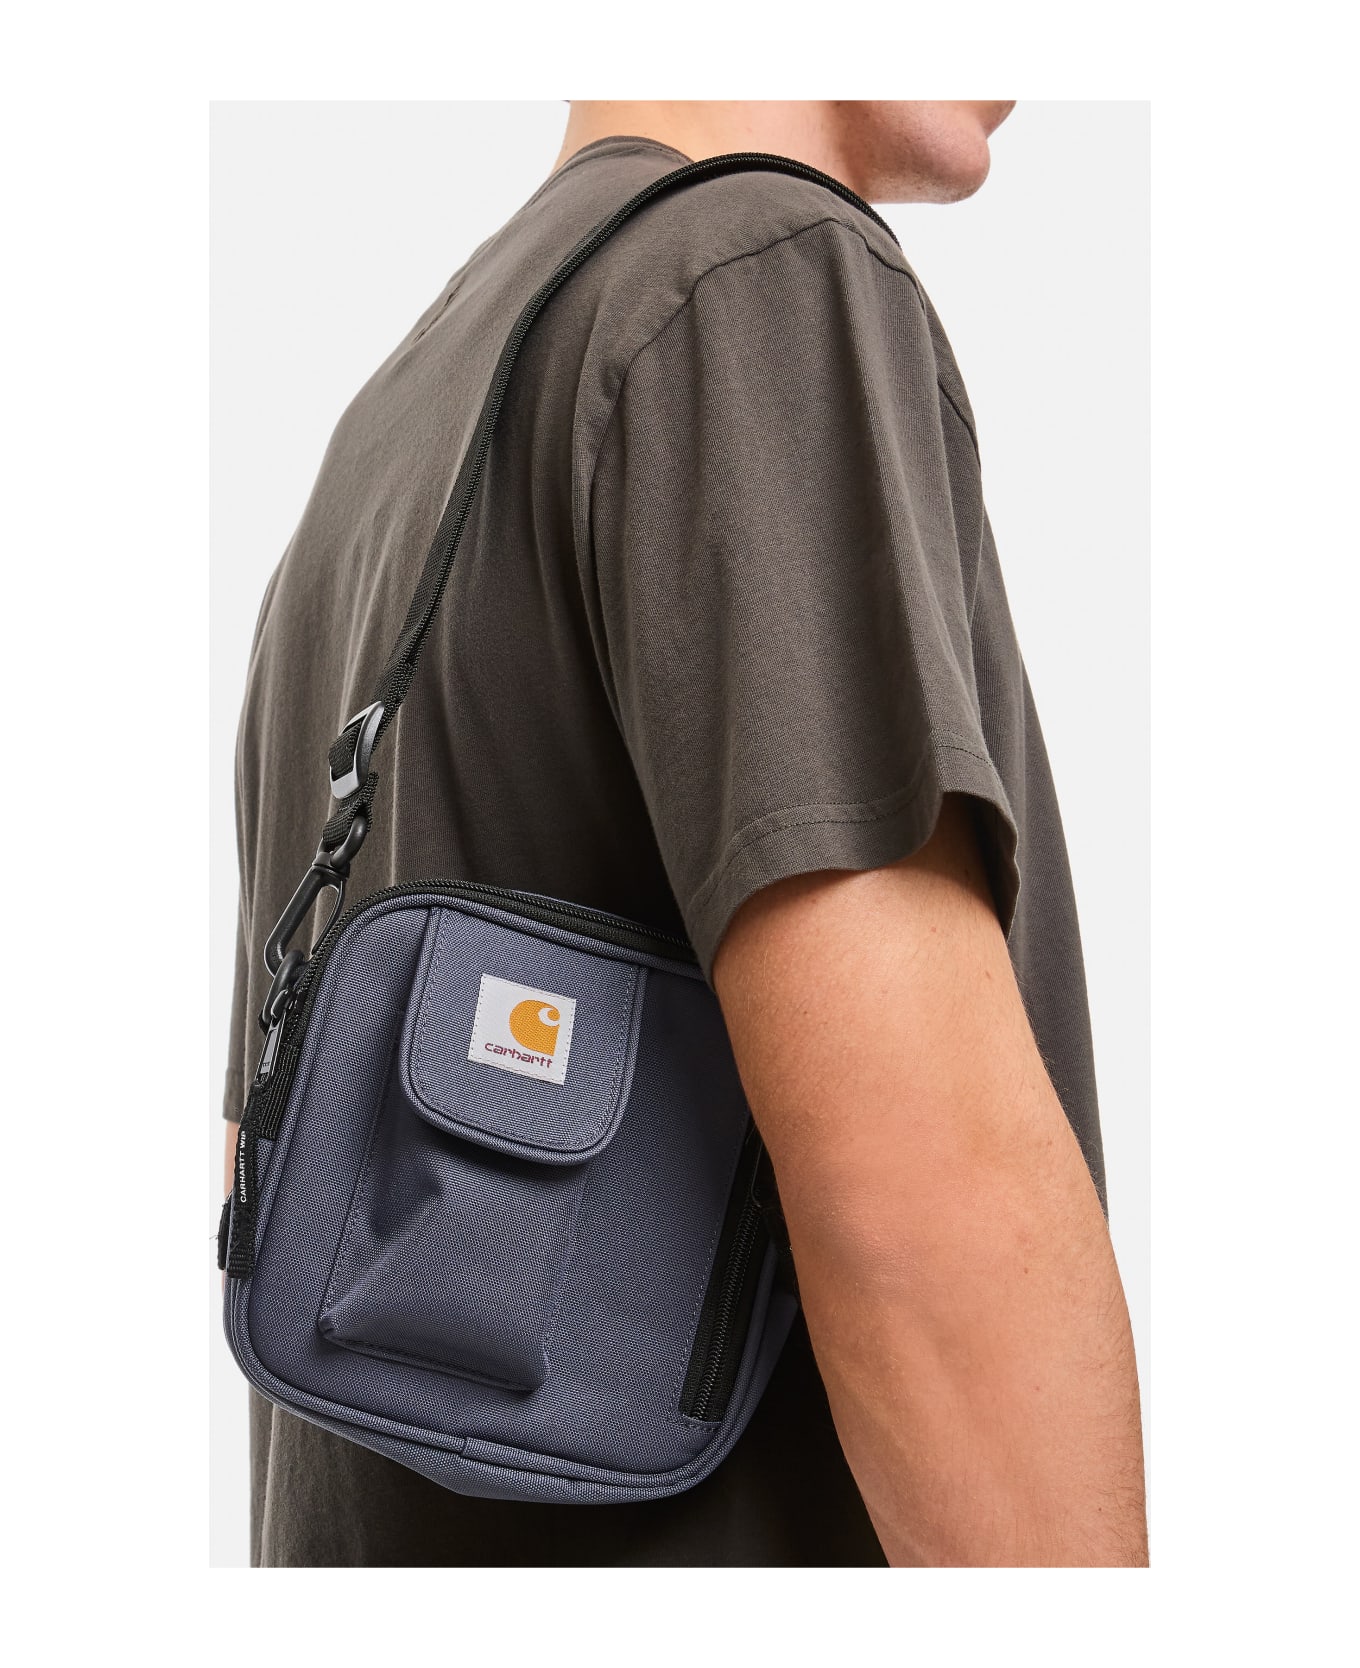 Carhartt Essentials Small Bag - Grey